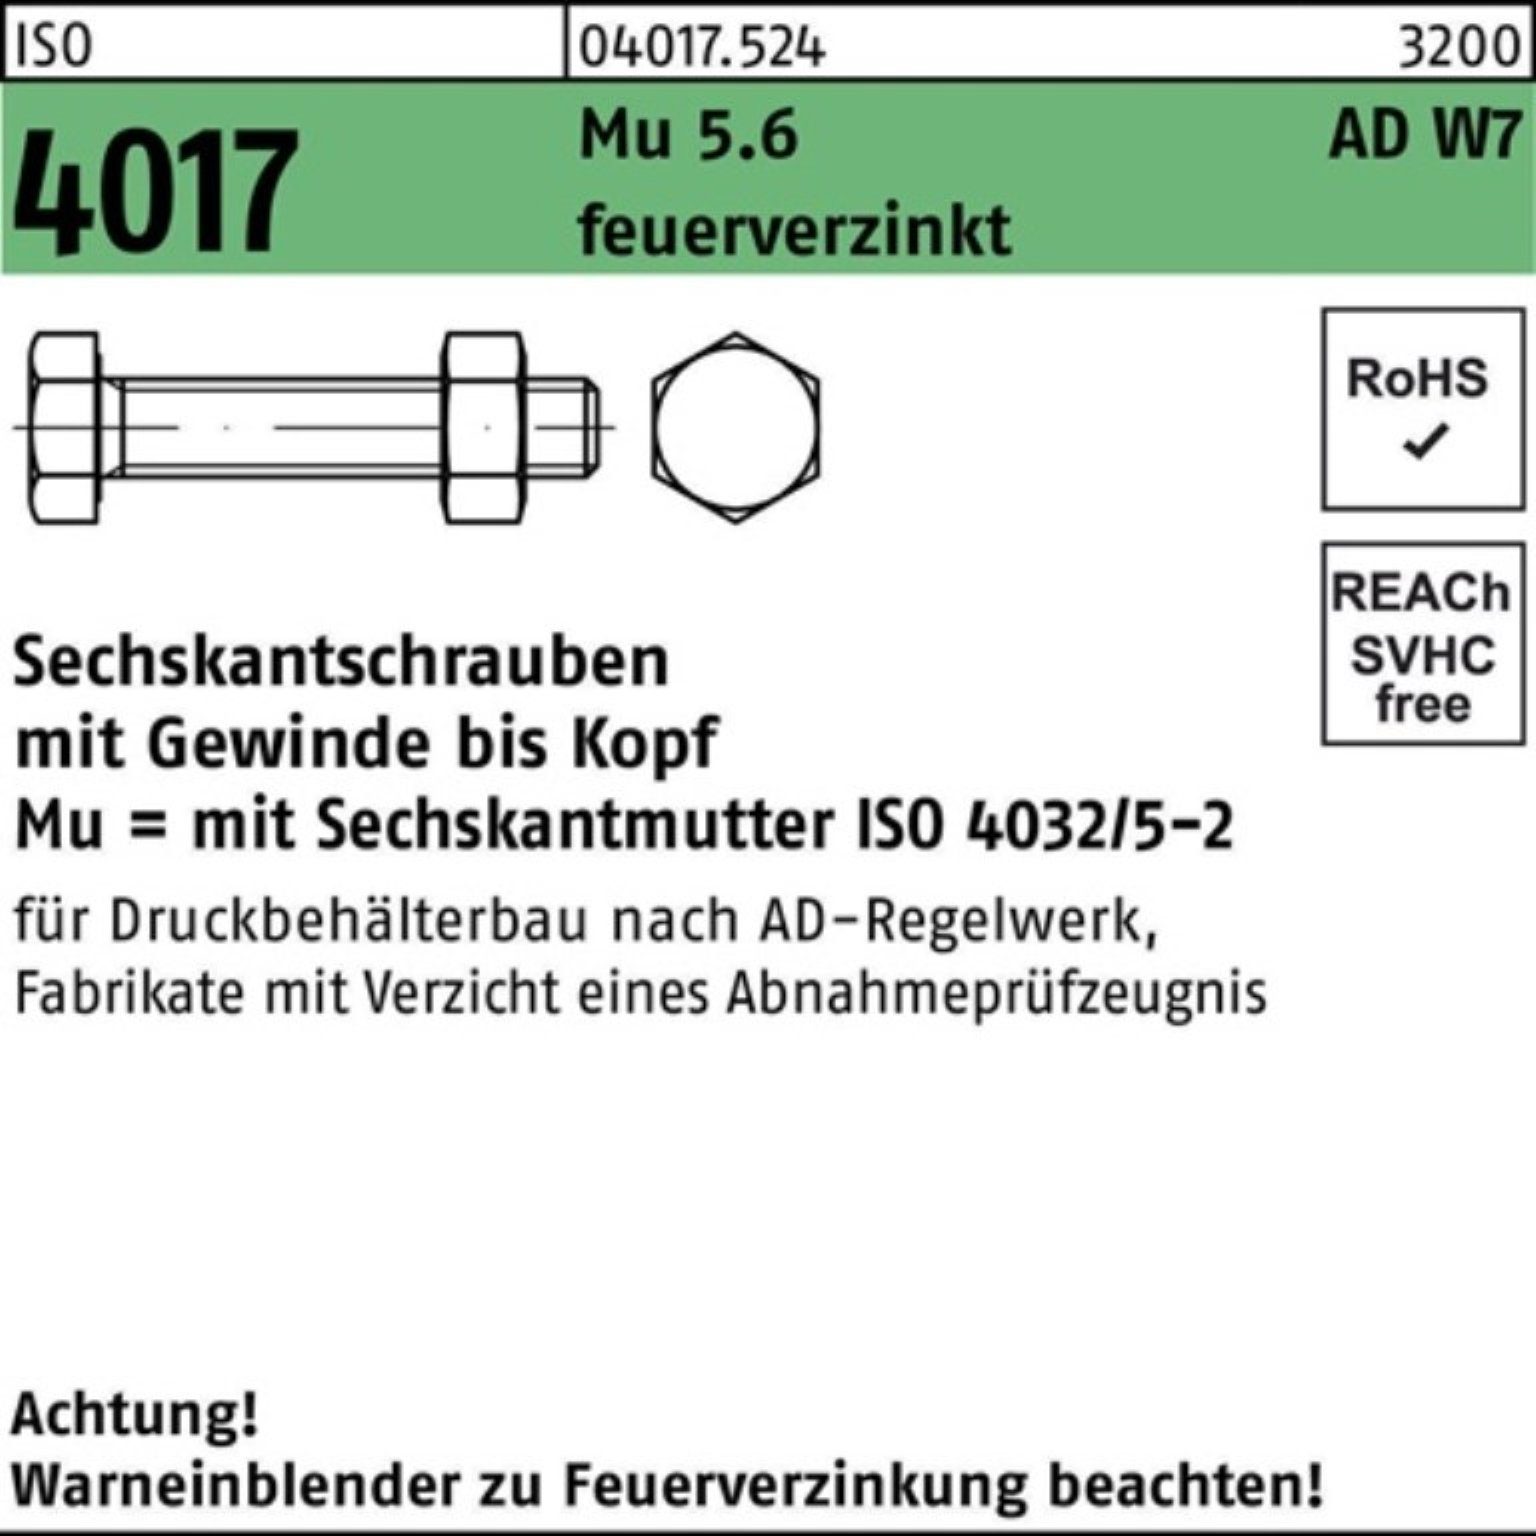 Sechskantschraube Bufab VG 5.6 100er 4017 Sechskantschraube M12x AD Mutter Pack feue W7 40 ISO